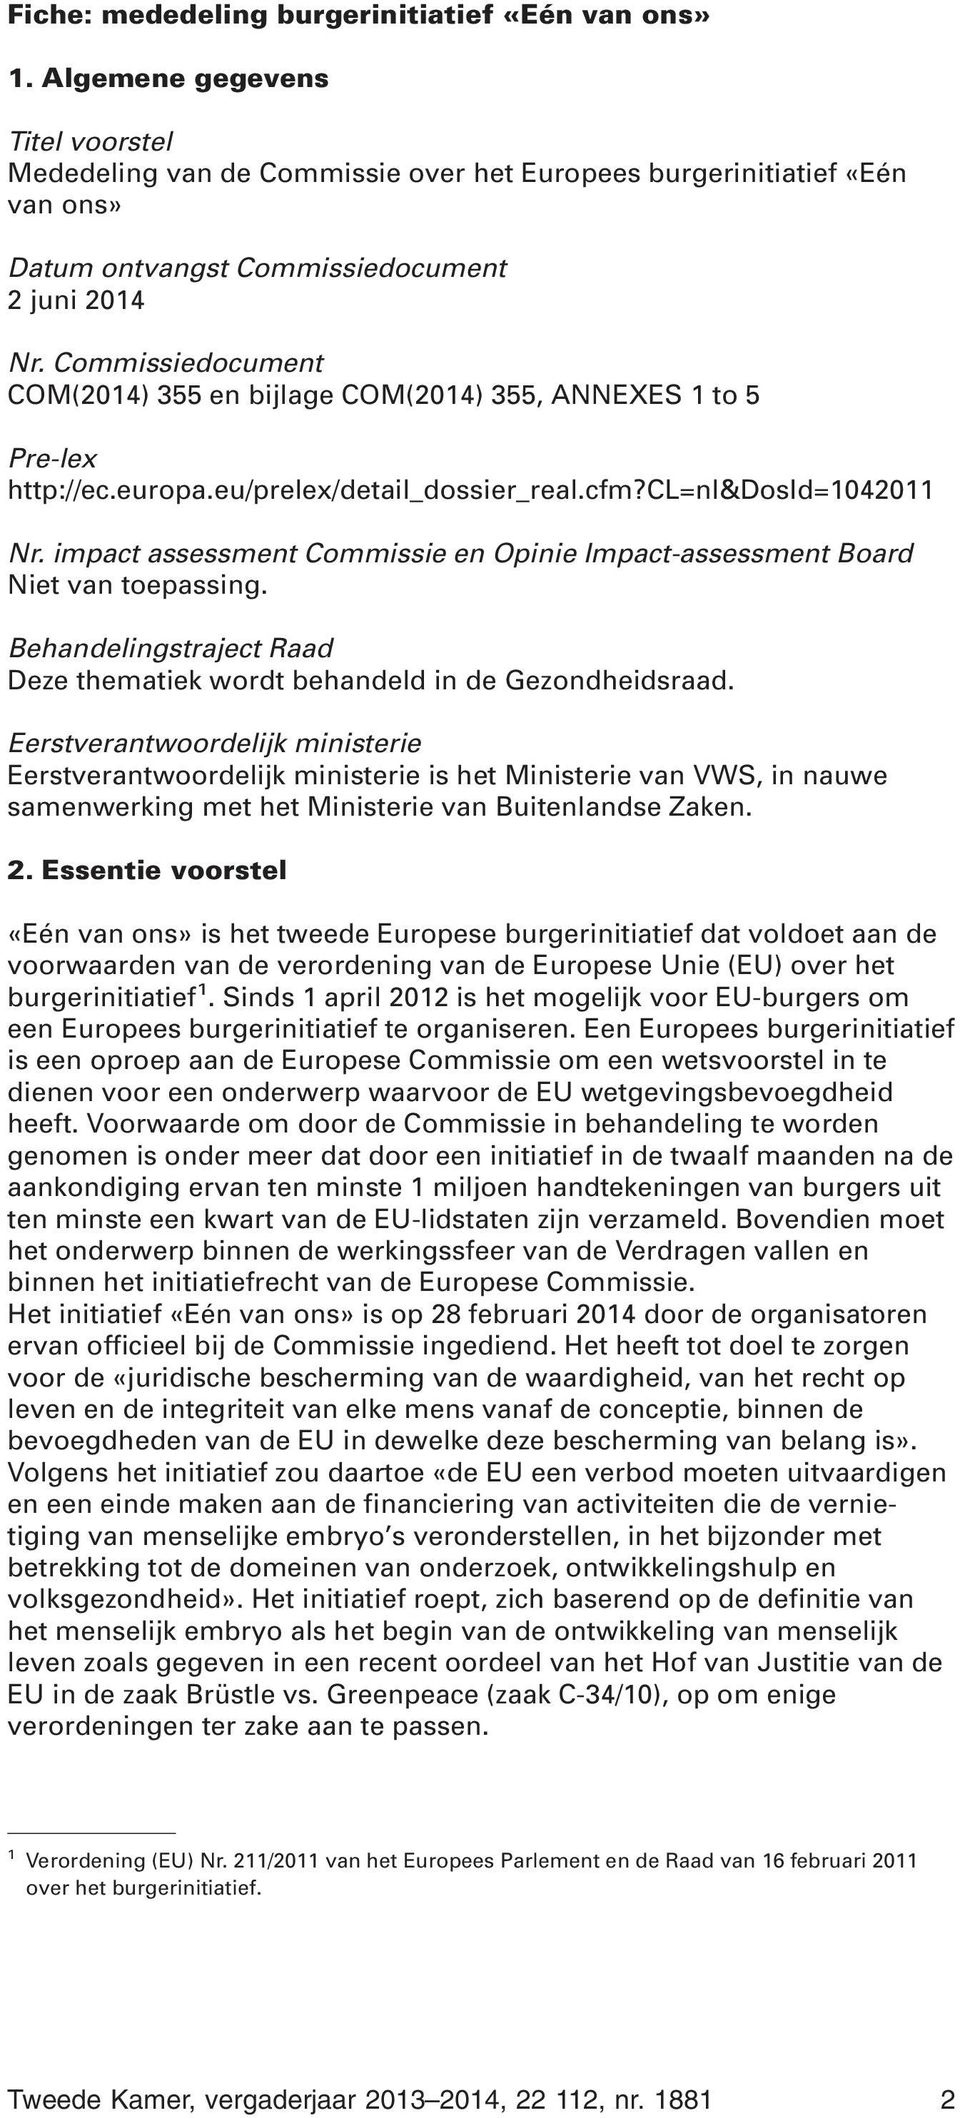 Commissiedocument COM(2014) 355 en bijlage COM(2014) 355, ANNEXES 1 to 5 Pre-lex http://ec.europa.eu/prelex/detail_dossier_real.cfm?cl=nl&dosid=1042011 Nr.